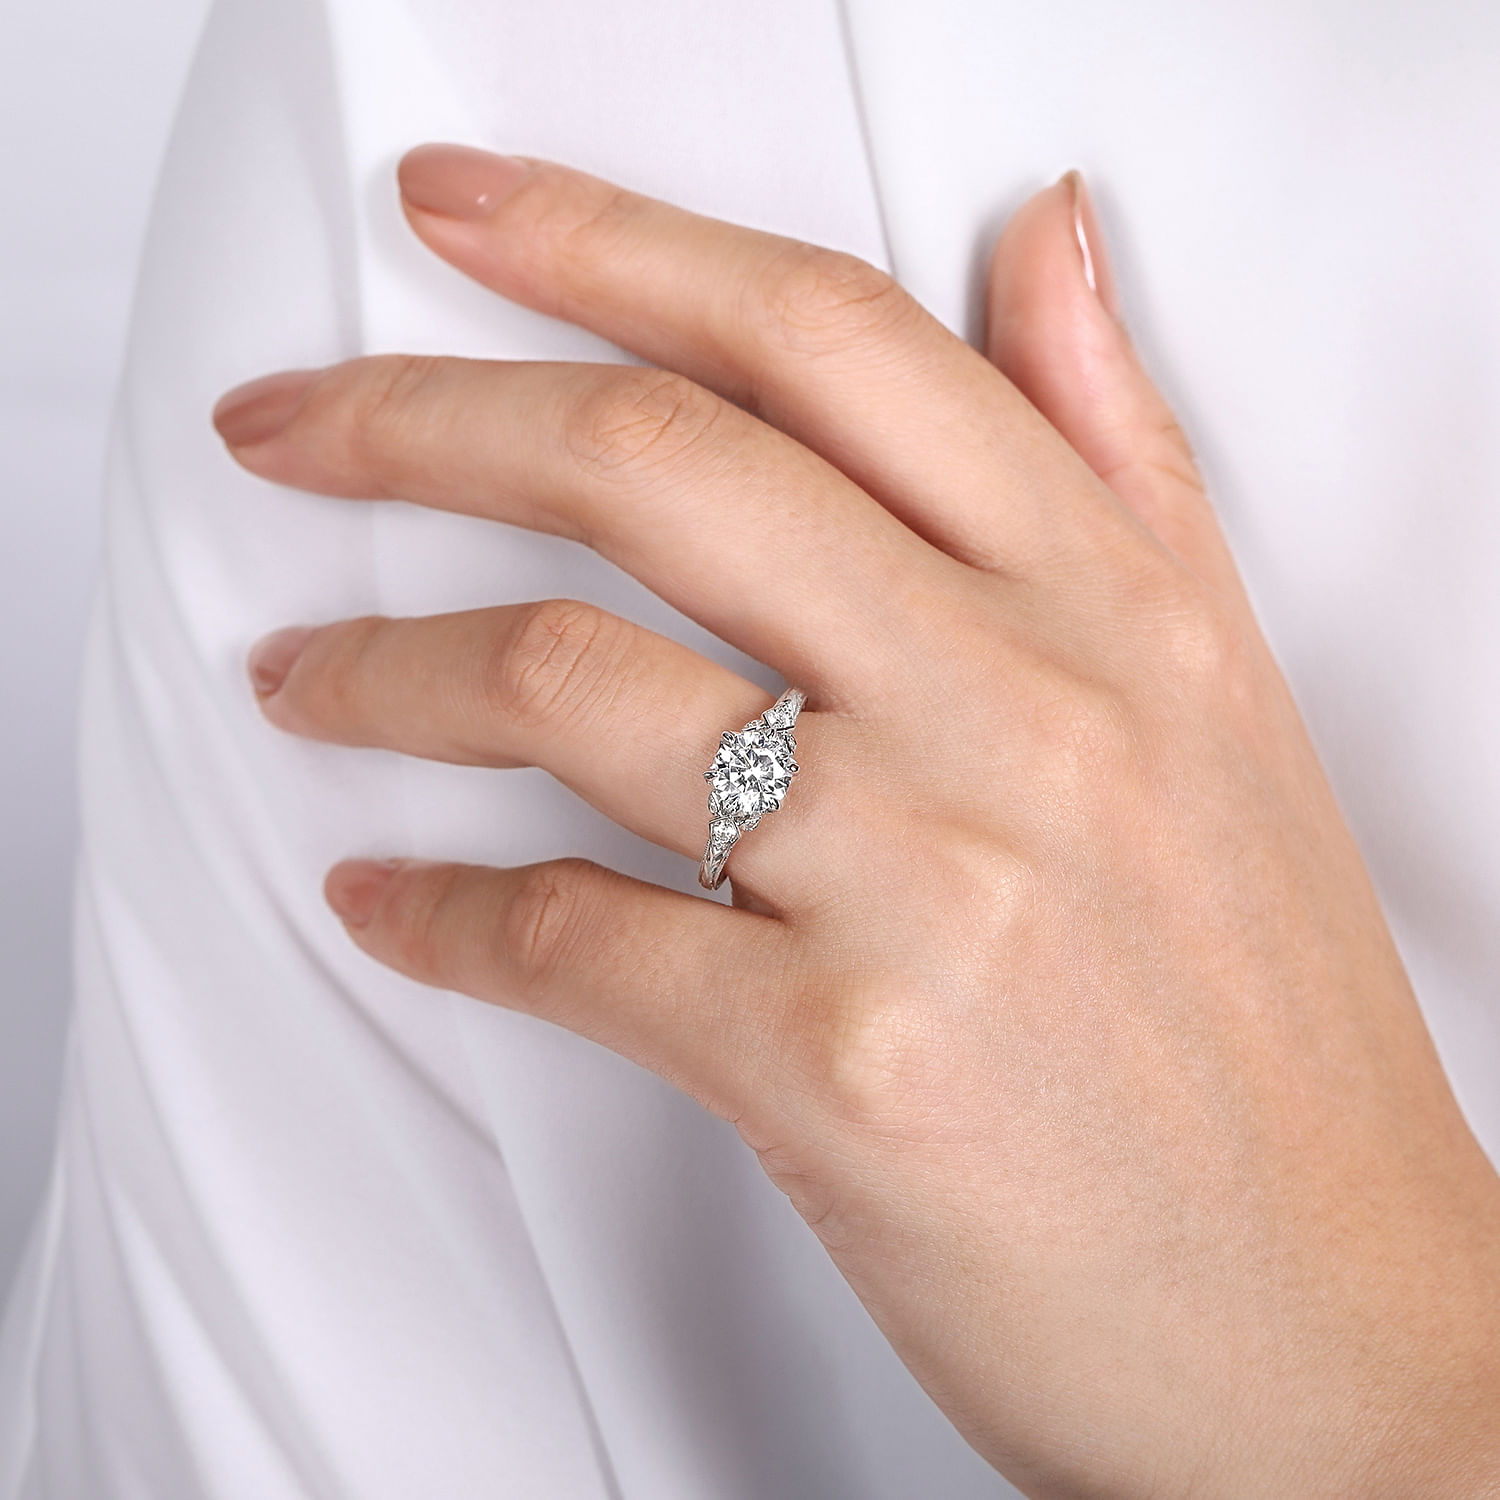 Vintage Inspired 18K White Gold Round Diamond Channel Set Engagement Ring